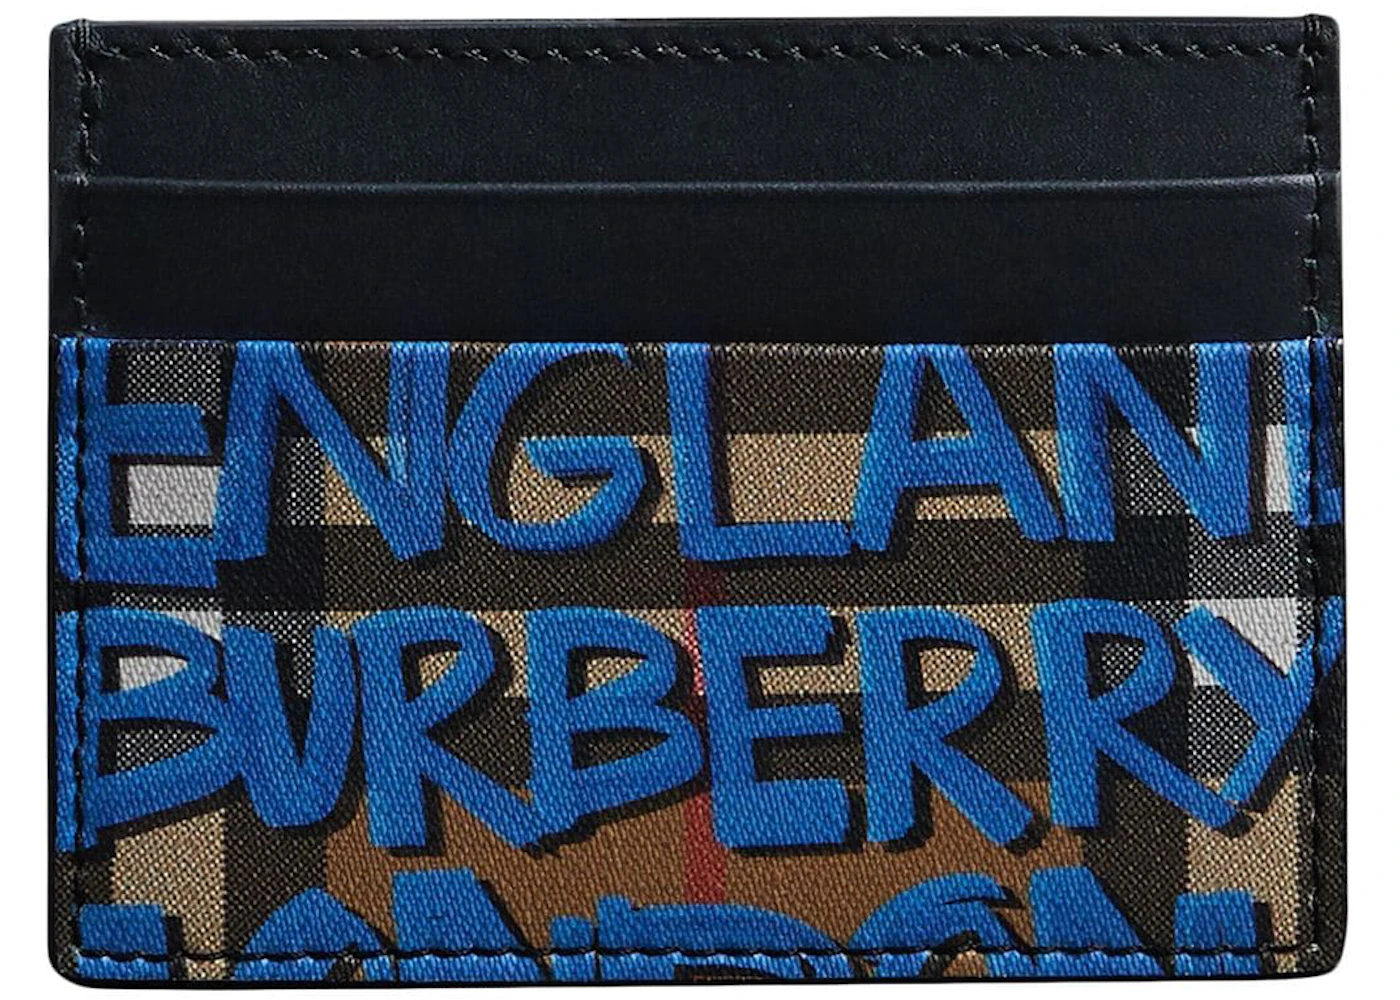 Burberry Card Case Graffiti Print Vintage Check Leather Black/Blue